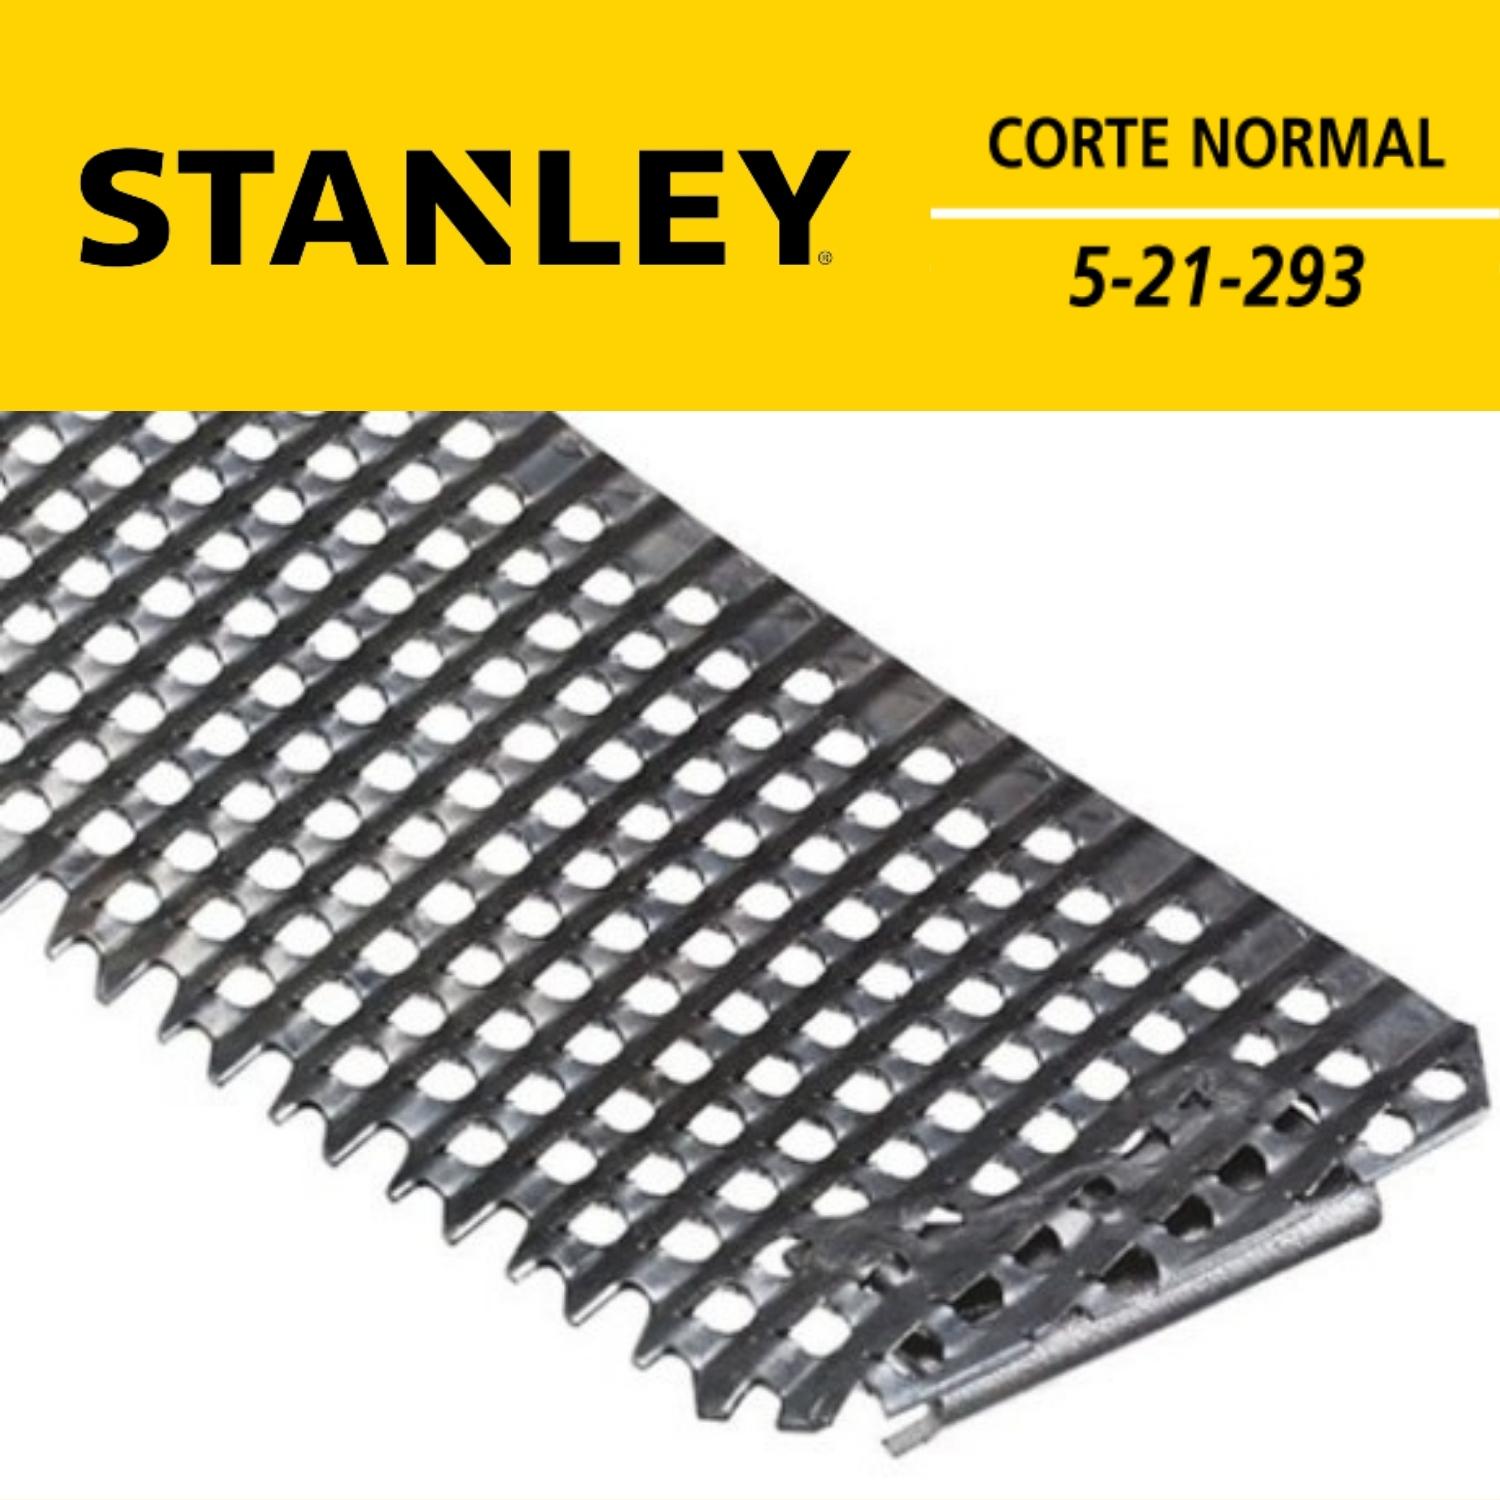 Lâmina Surform de Corte Standard Stanley 250mm - Corte Standard 250mm (5-21-293) - Limitado ao Stock